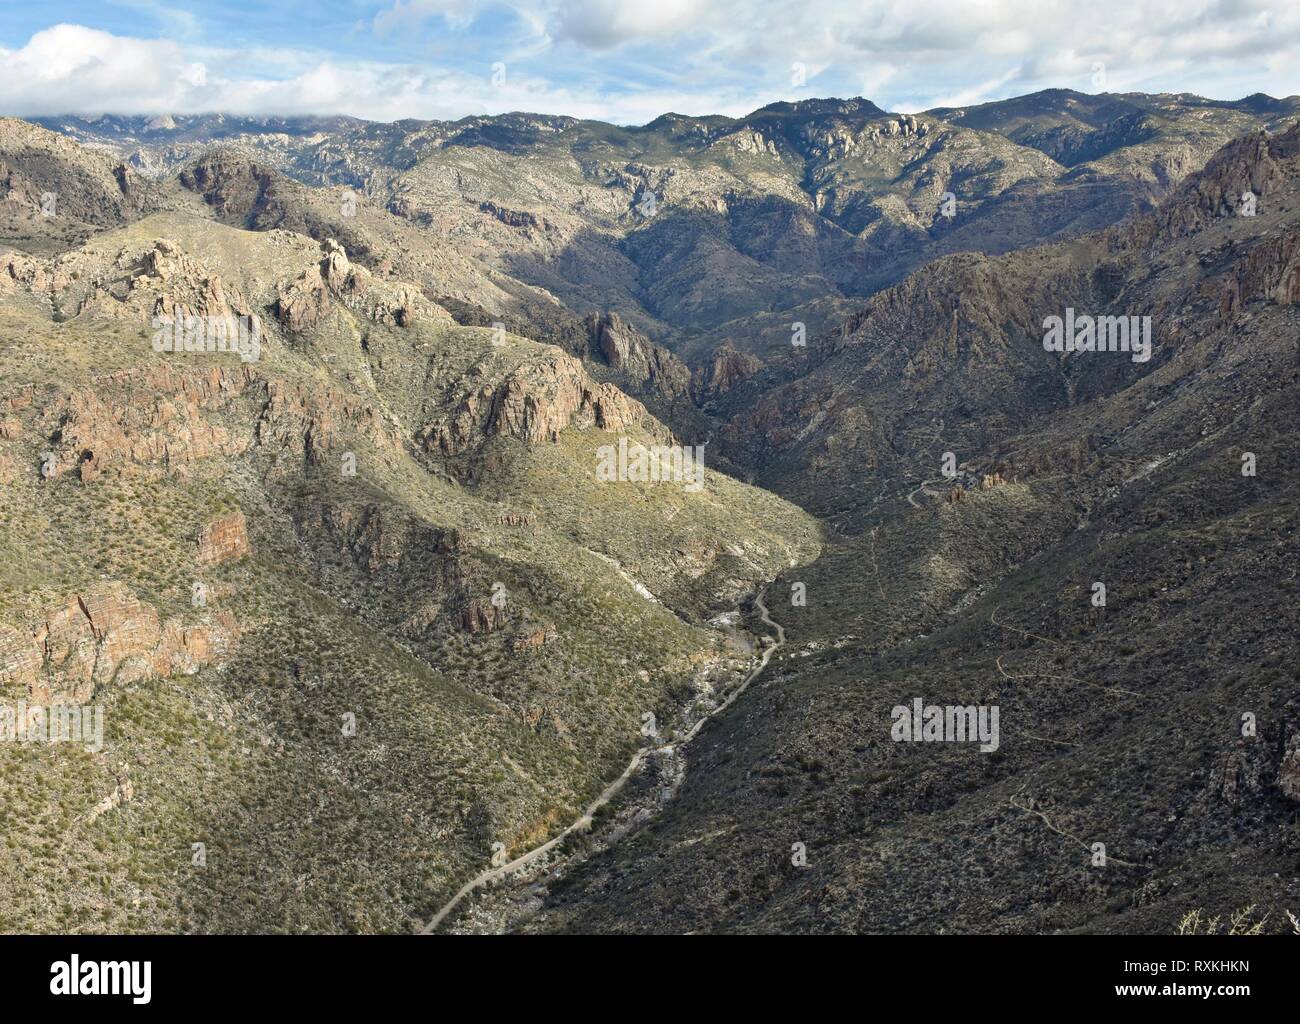 Aerial view of Sabino Canyon in Tucson, Arizona. Stock Photo